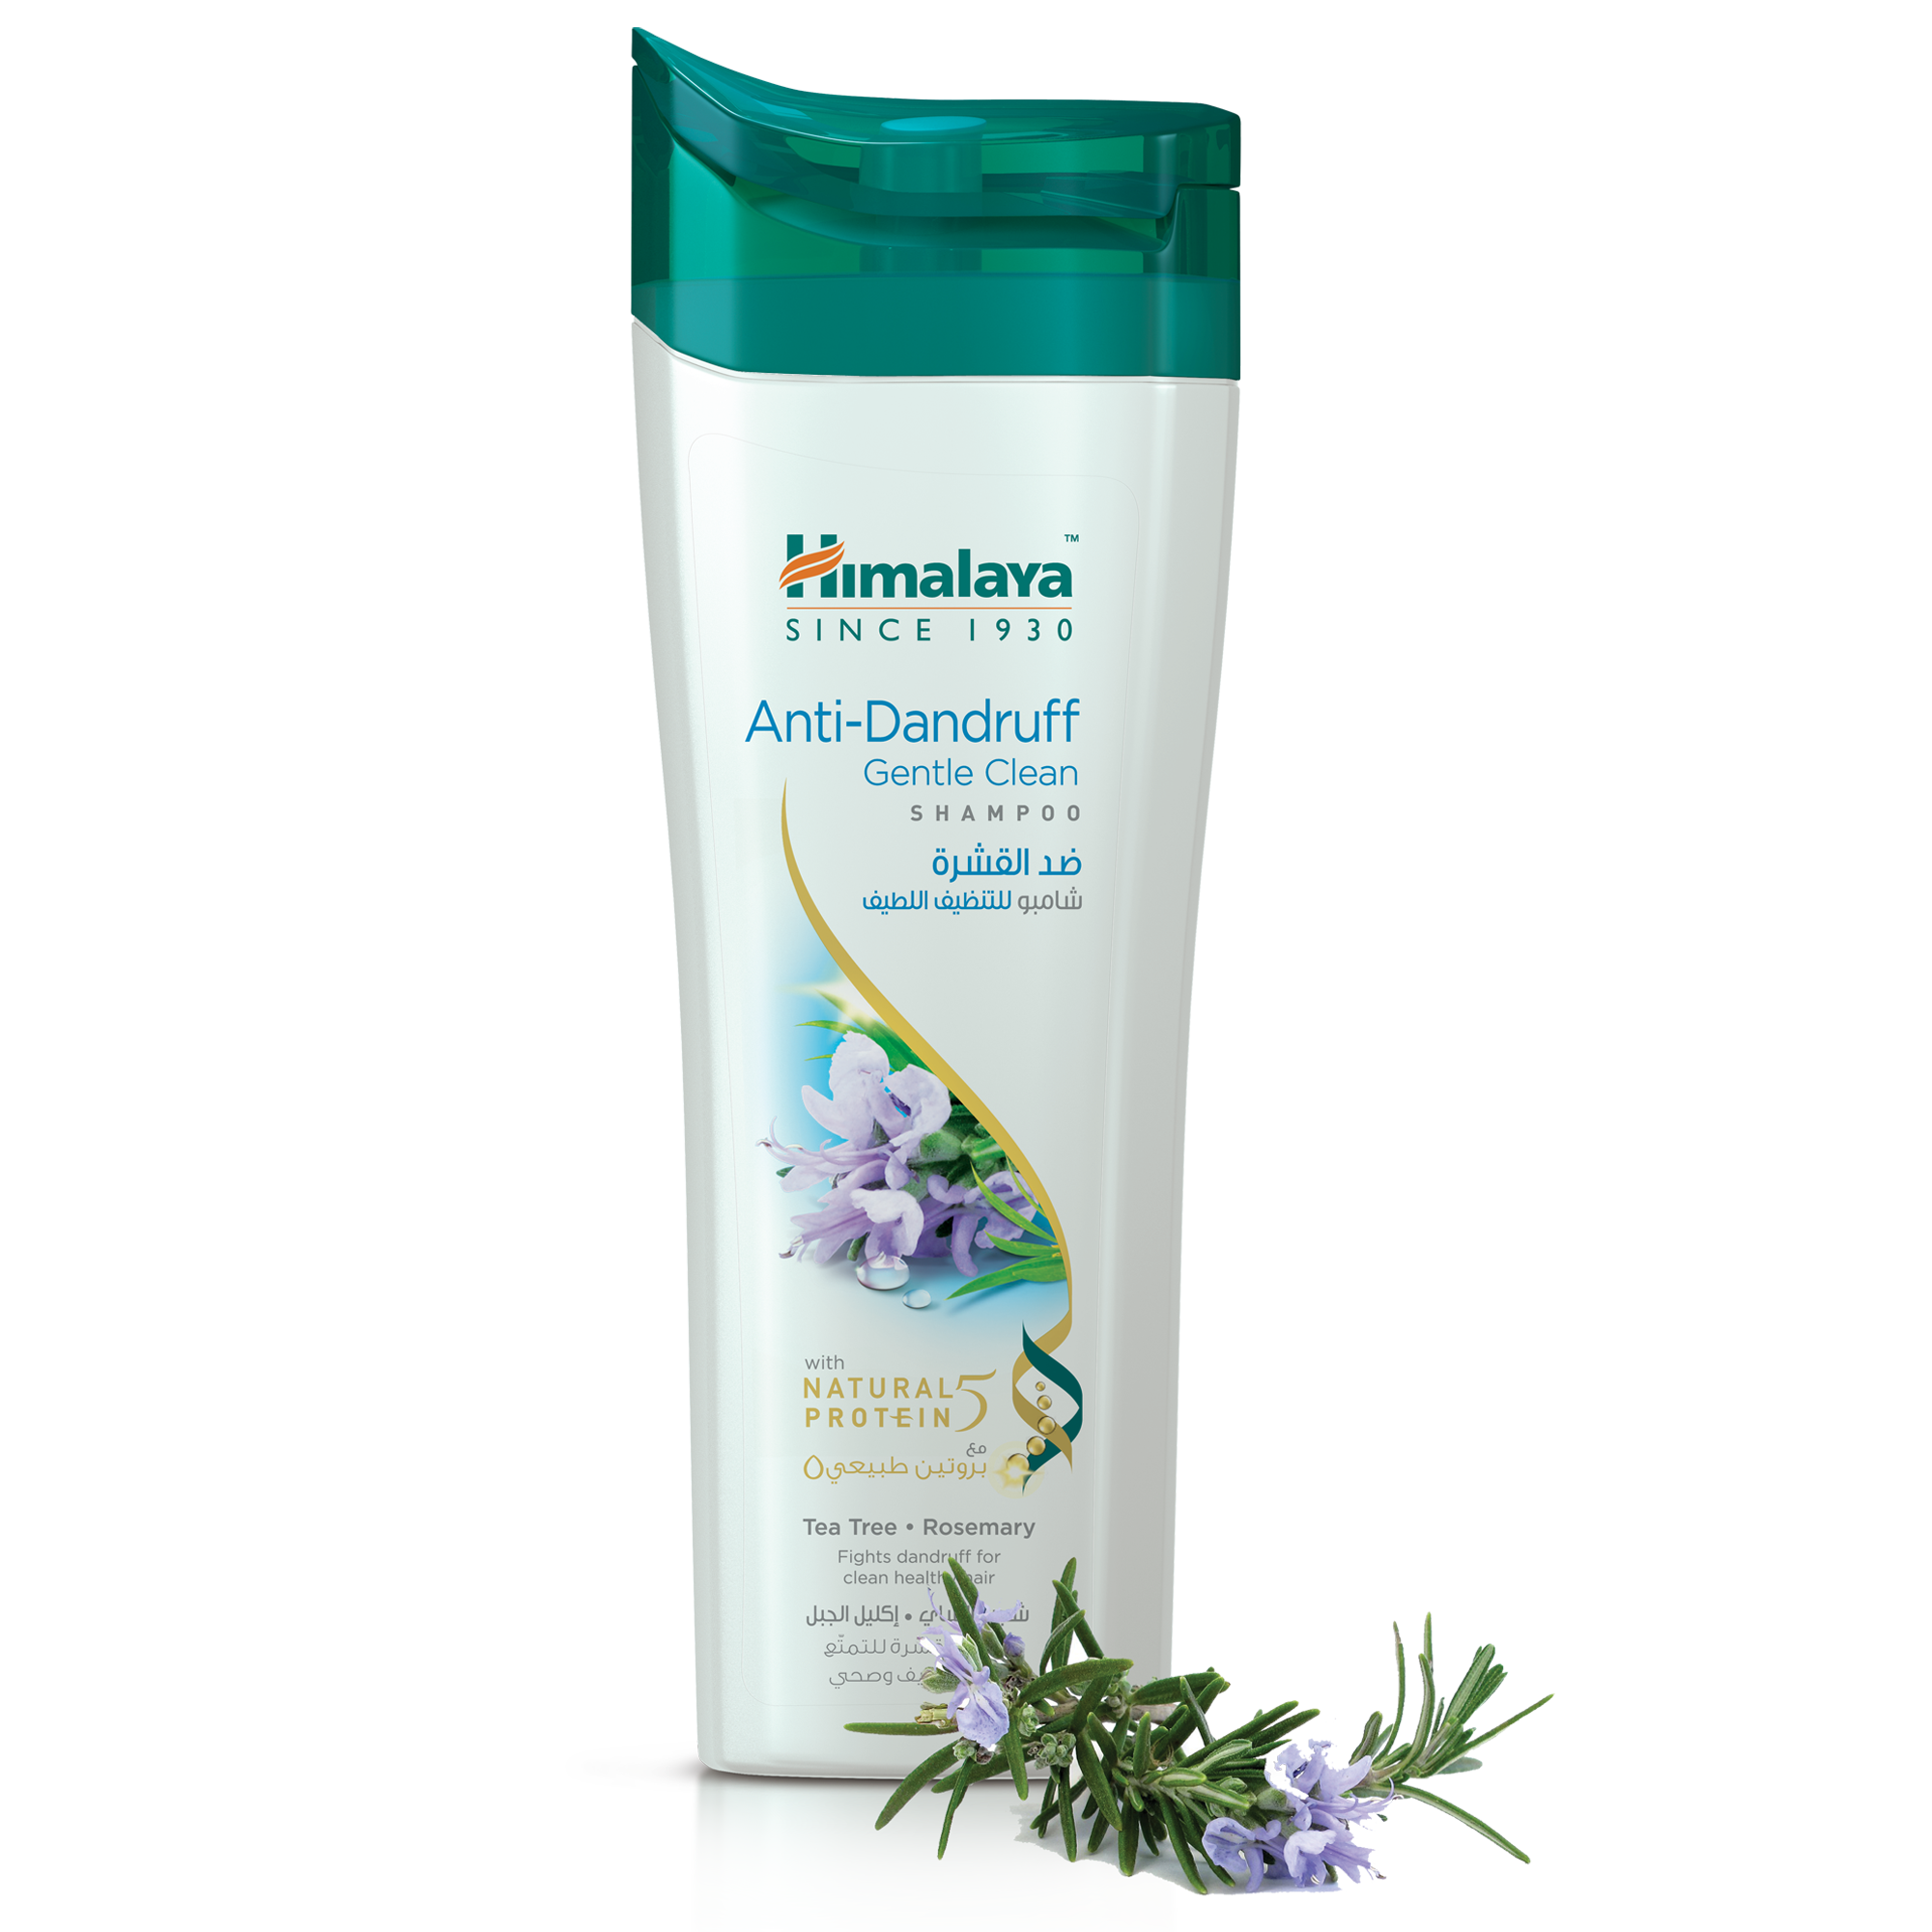 Himalaya Anti Dandruff Gentle Clean Shampoo 400ml - Manages Dandruff